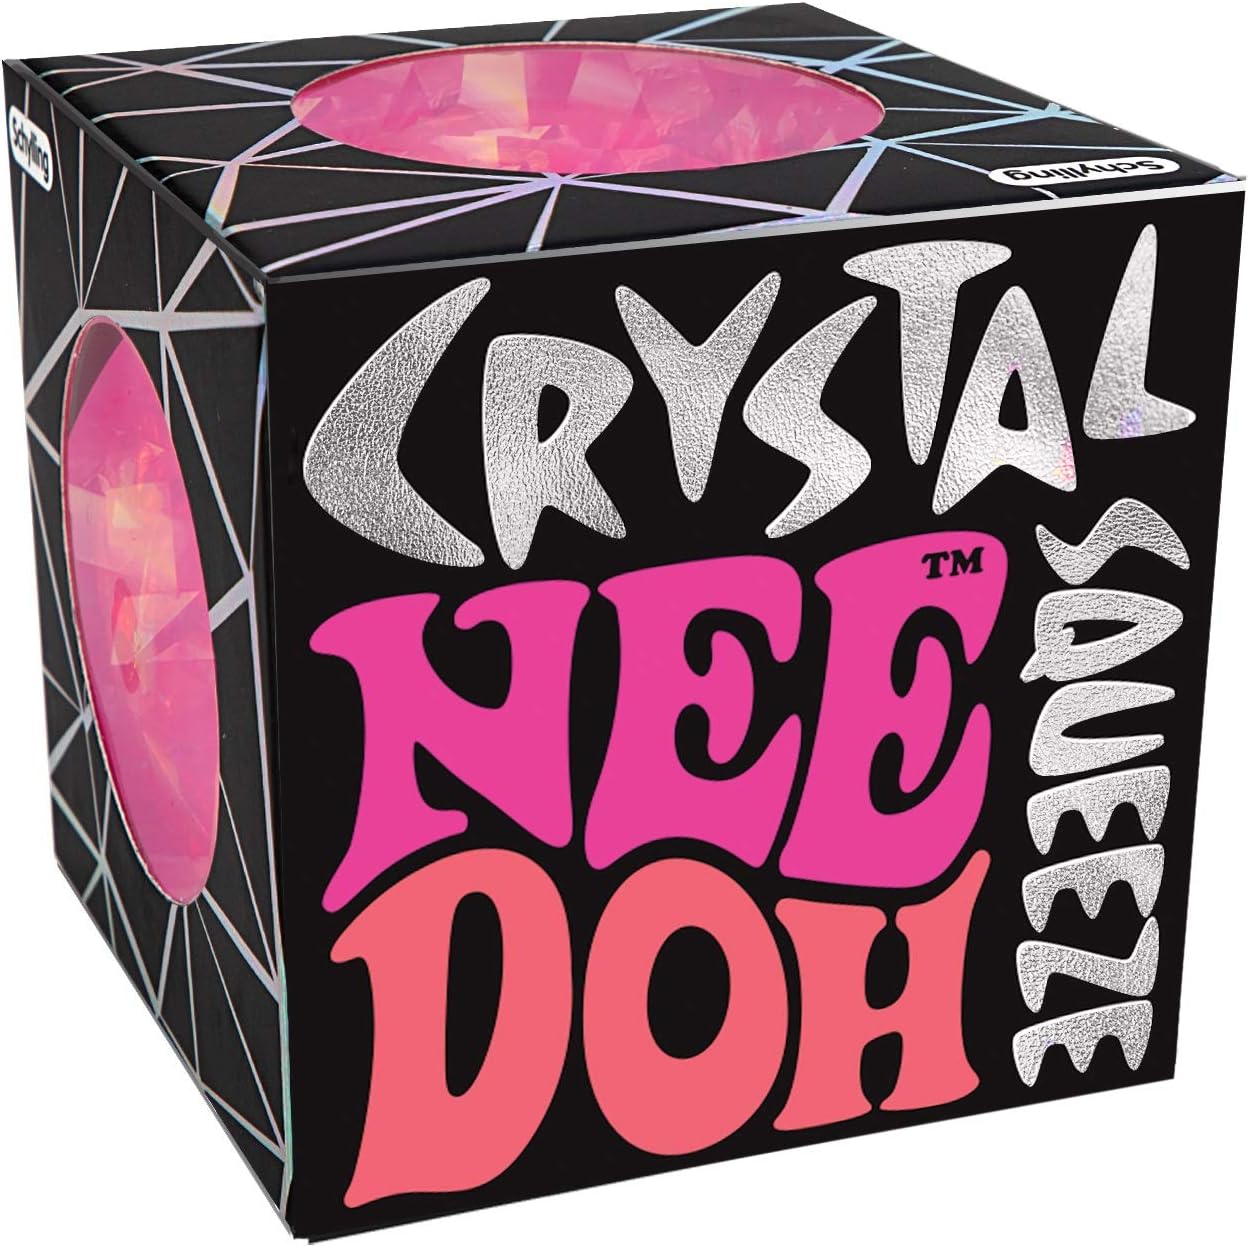 Crystal Nee Doh – Sensory Tool House, LLC